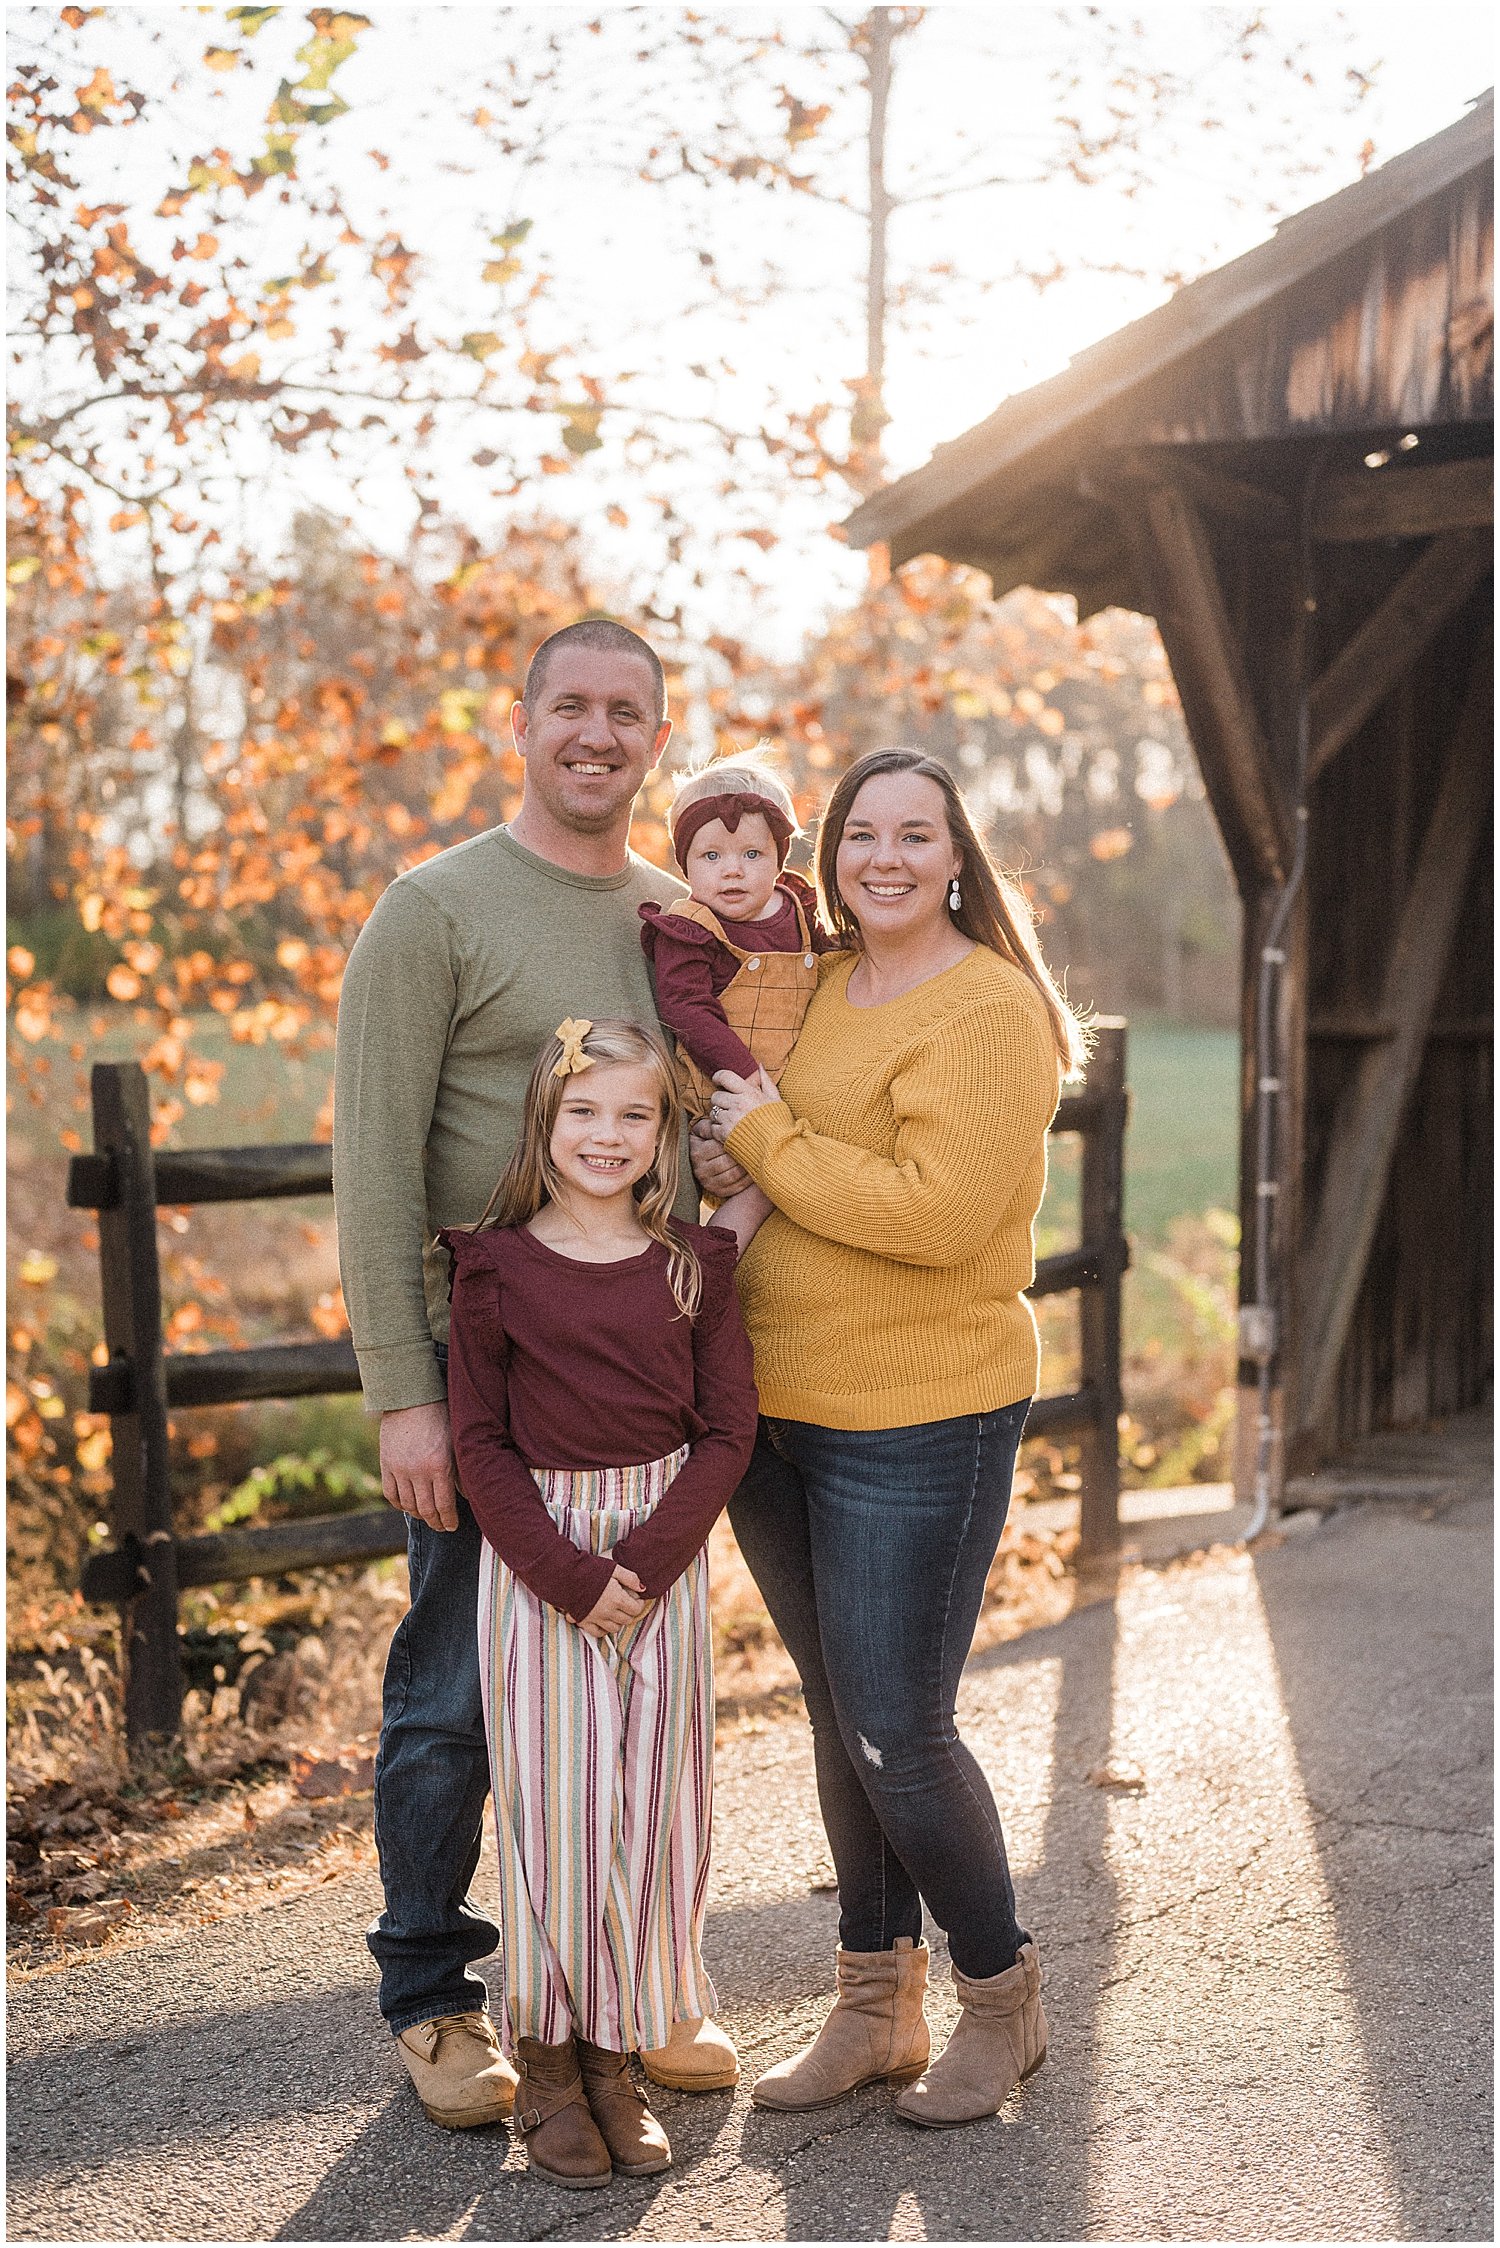 Hidden Valley Orchards Fall Family Portraits | Lebanon, Ohio